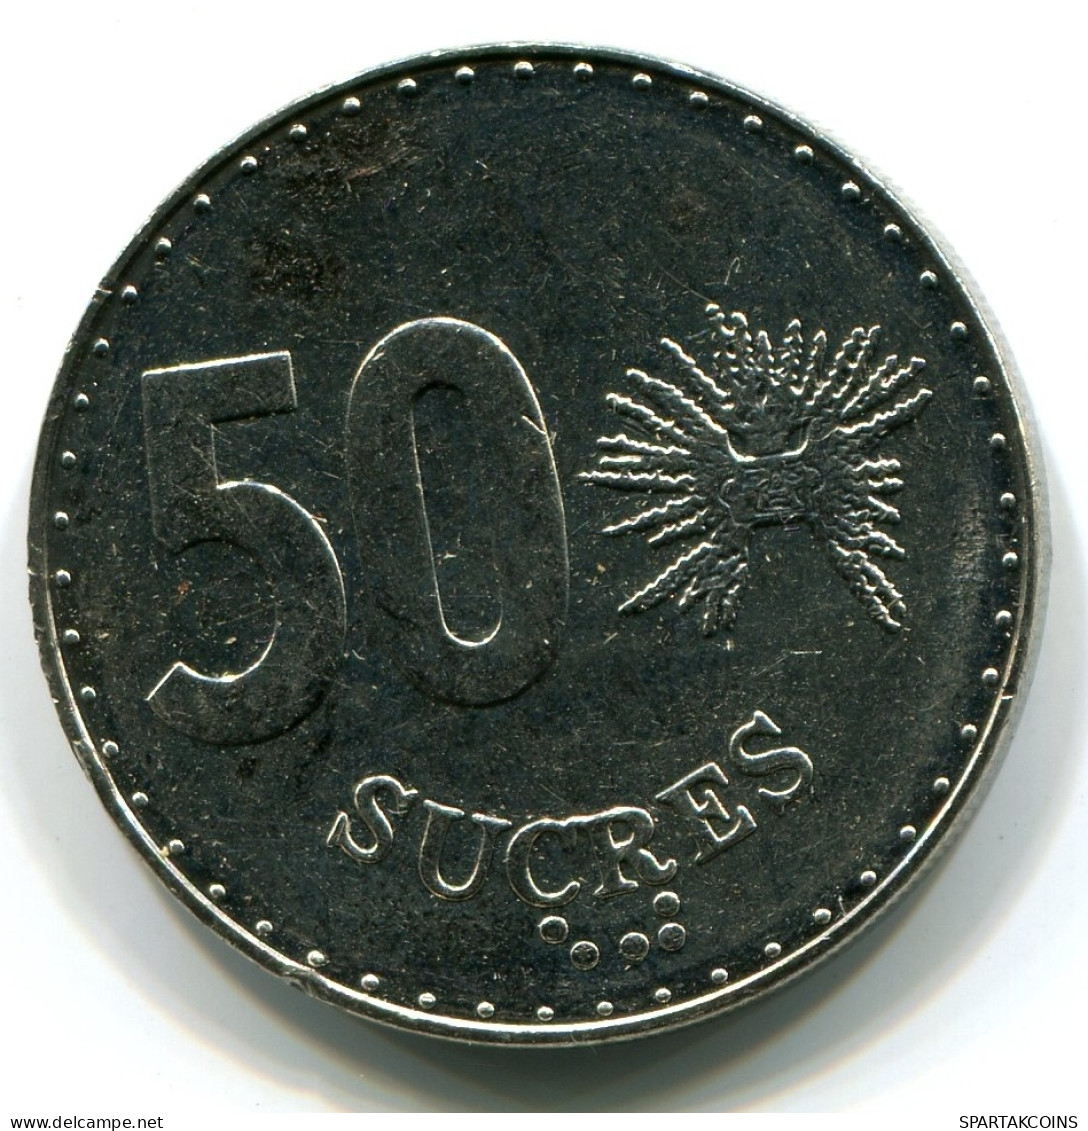 50 SUCRE 1991 ECUADOR UNC Coin #W11019.U - Equateur